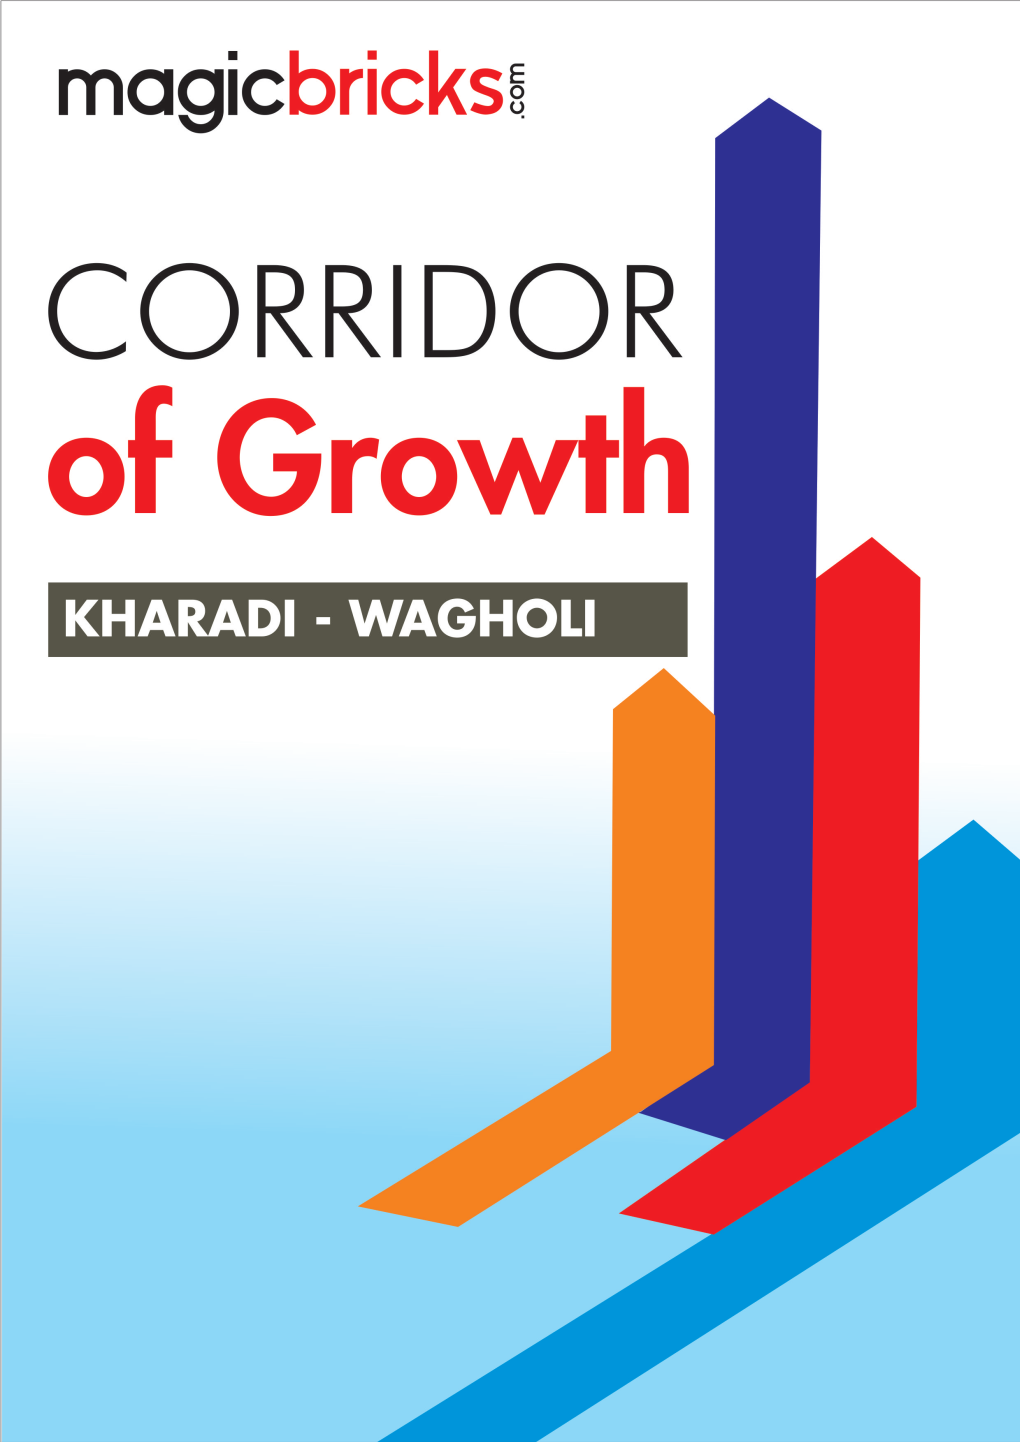 KHARADI - WAGHOLI Corridor Description and Rating Areas Included